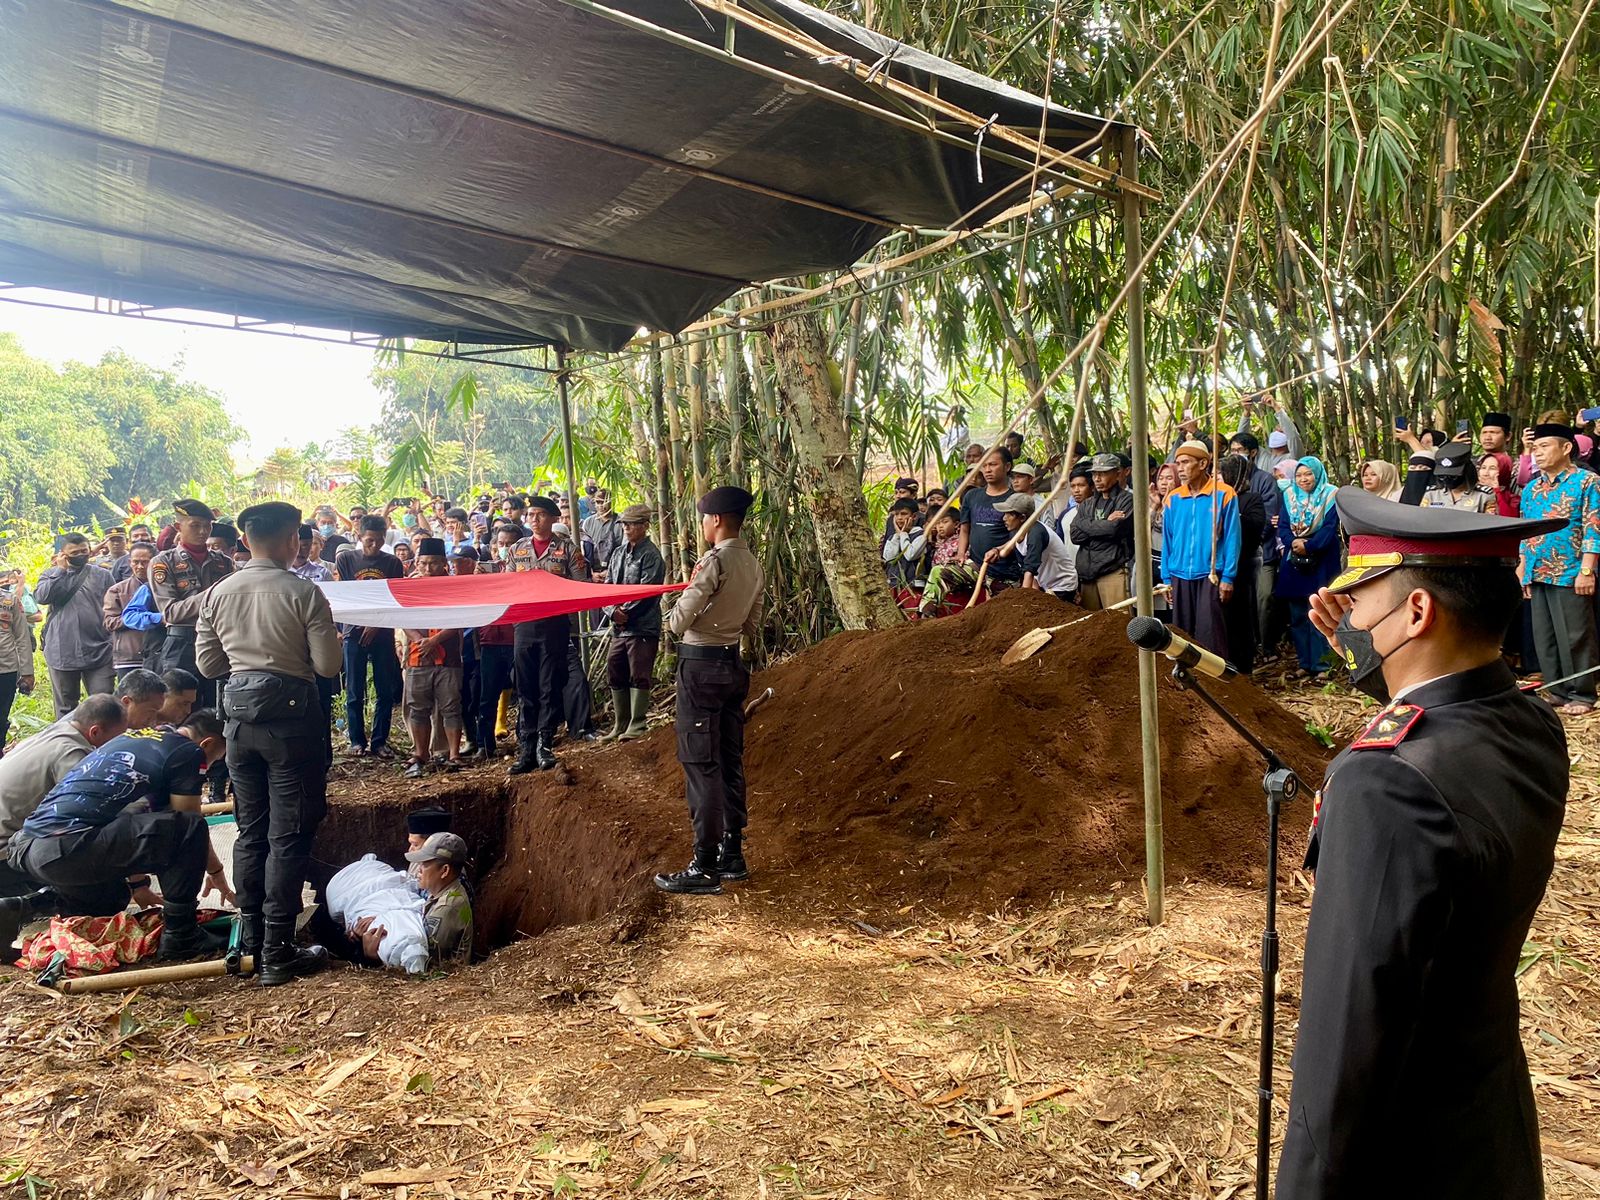 Wakapolres Sumedang Pimpin Upacara Pemakaman AKP (Purn) Ato Suharto